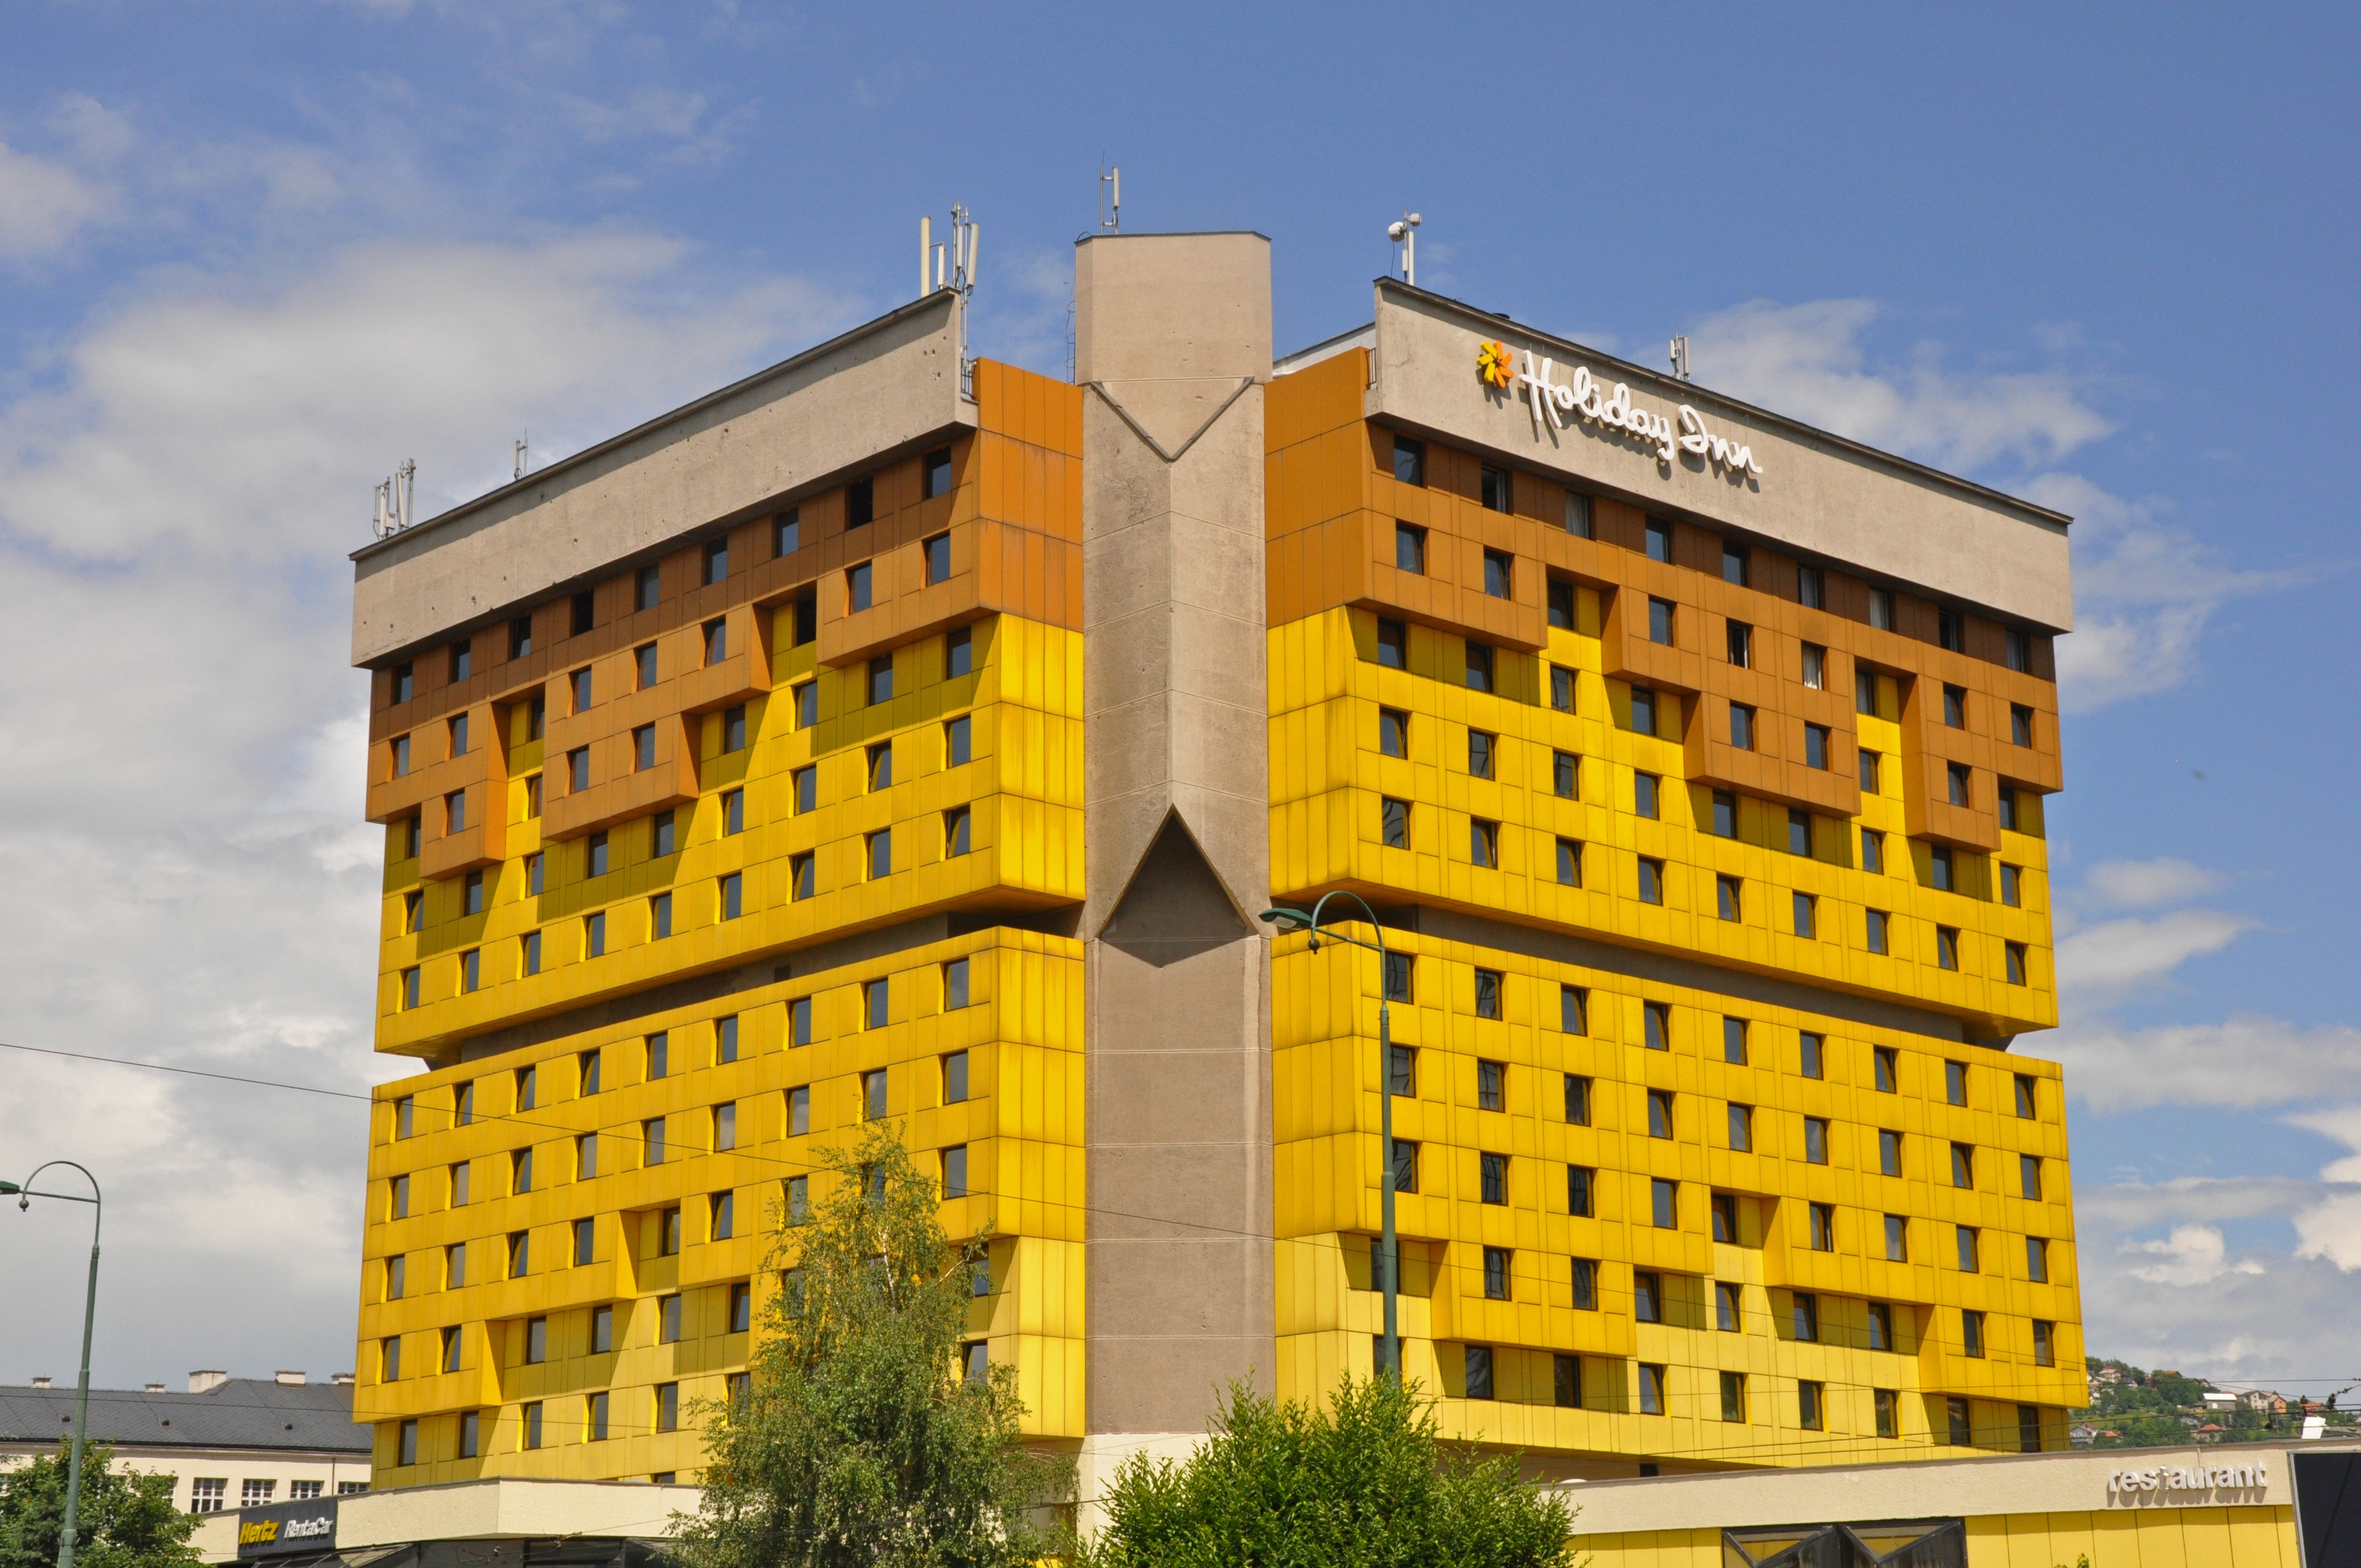 File:Holiday Inn Sarajevo in 2011.jpg - Wikimedia Commons